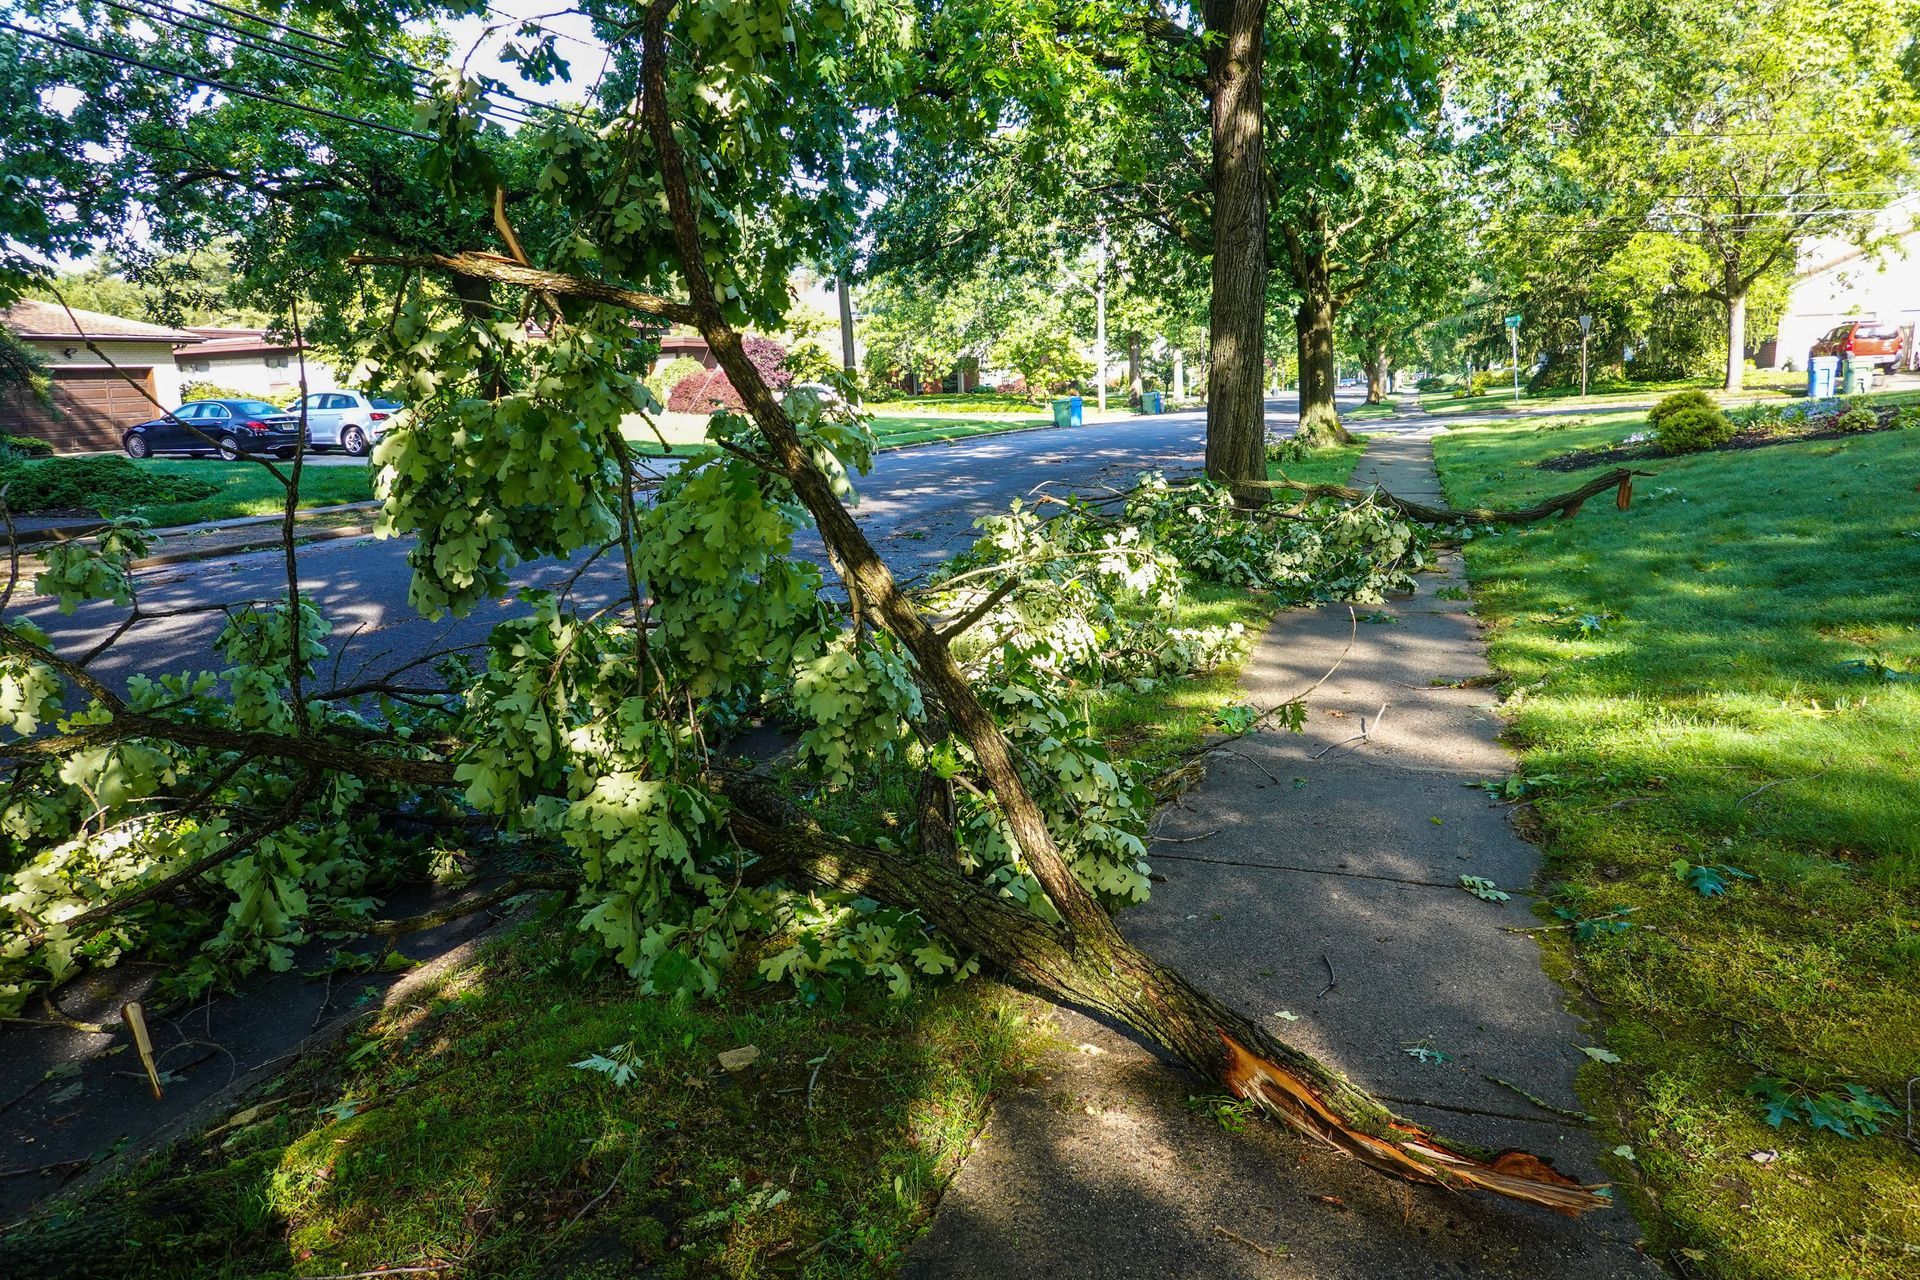 broken tree branches in sidewalk from storm